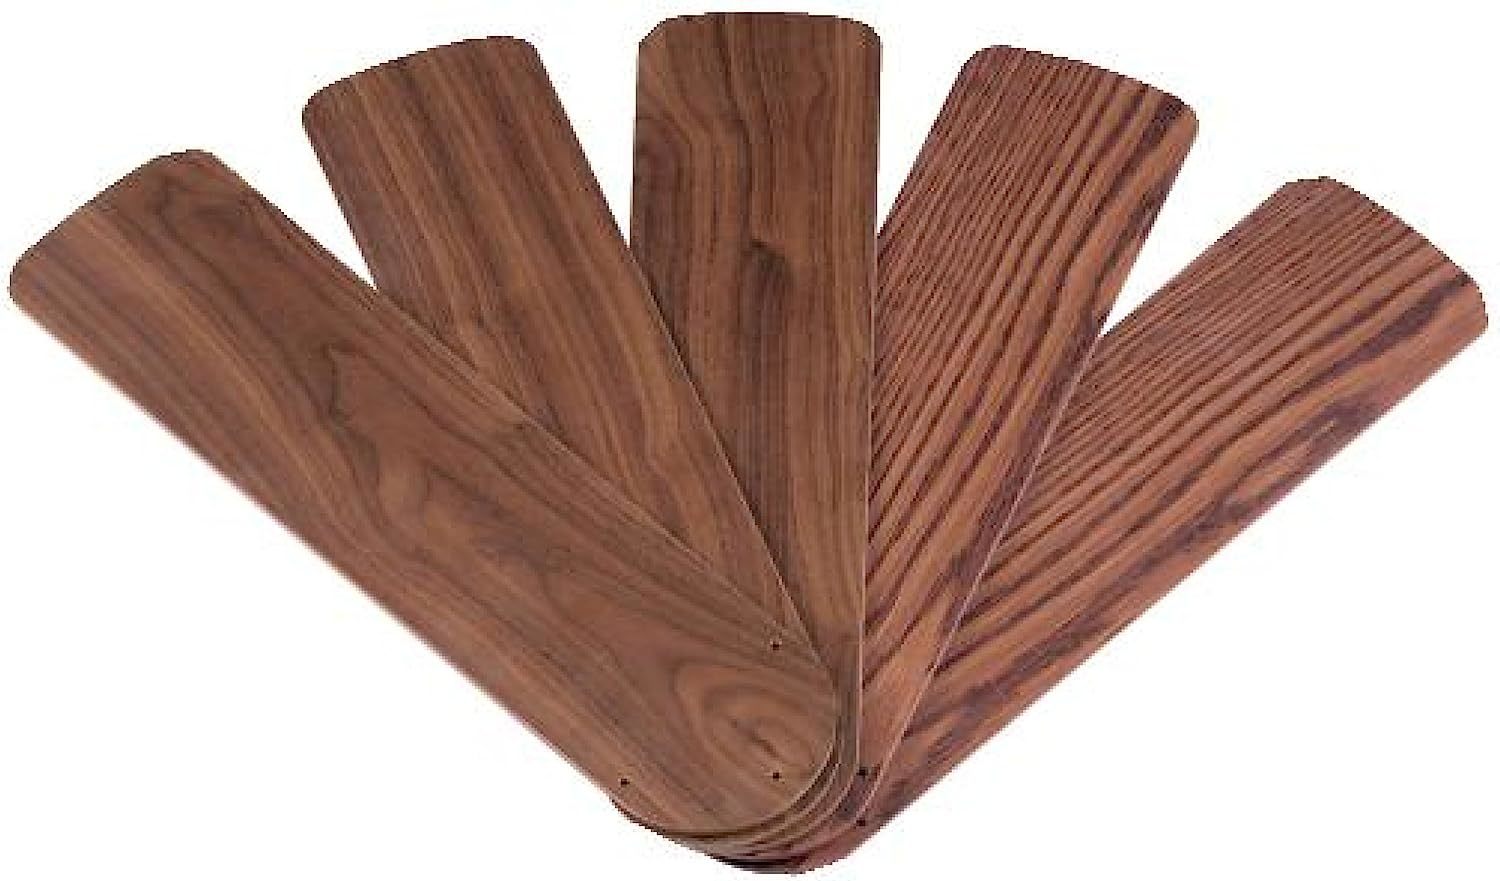 52-Inch Oak/Walnut Replacement Fan Blades, Five-Pack By Westinghouse Lighting - $54.92